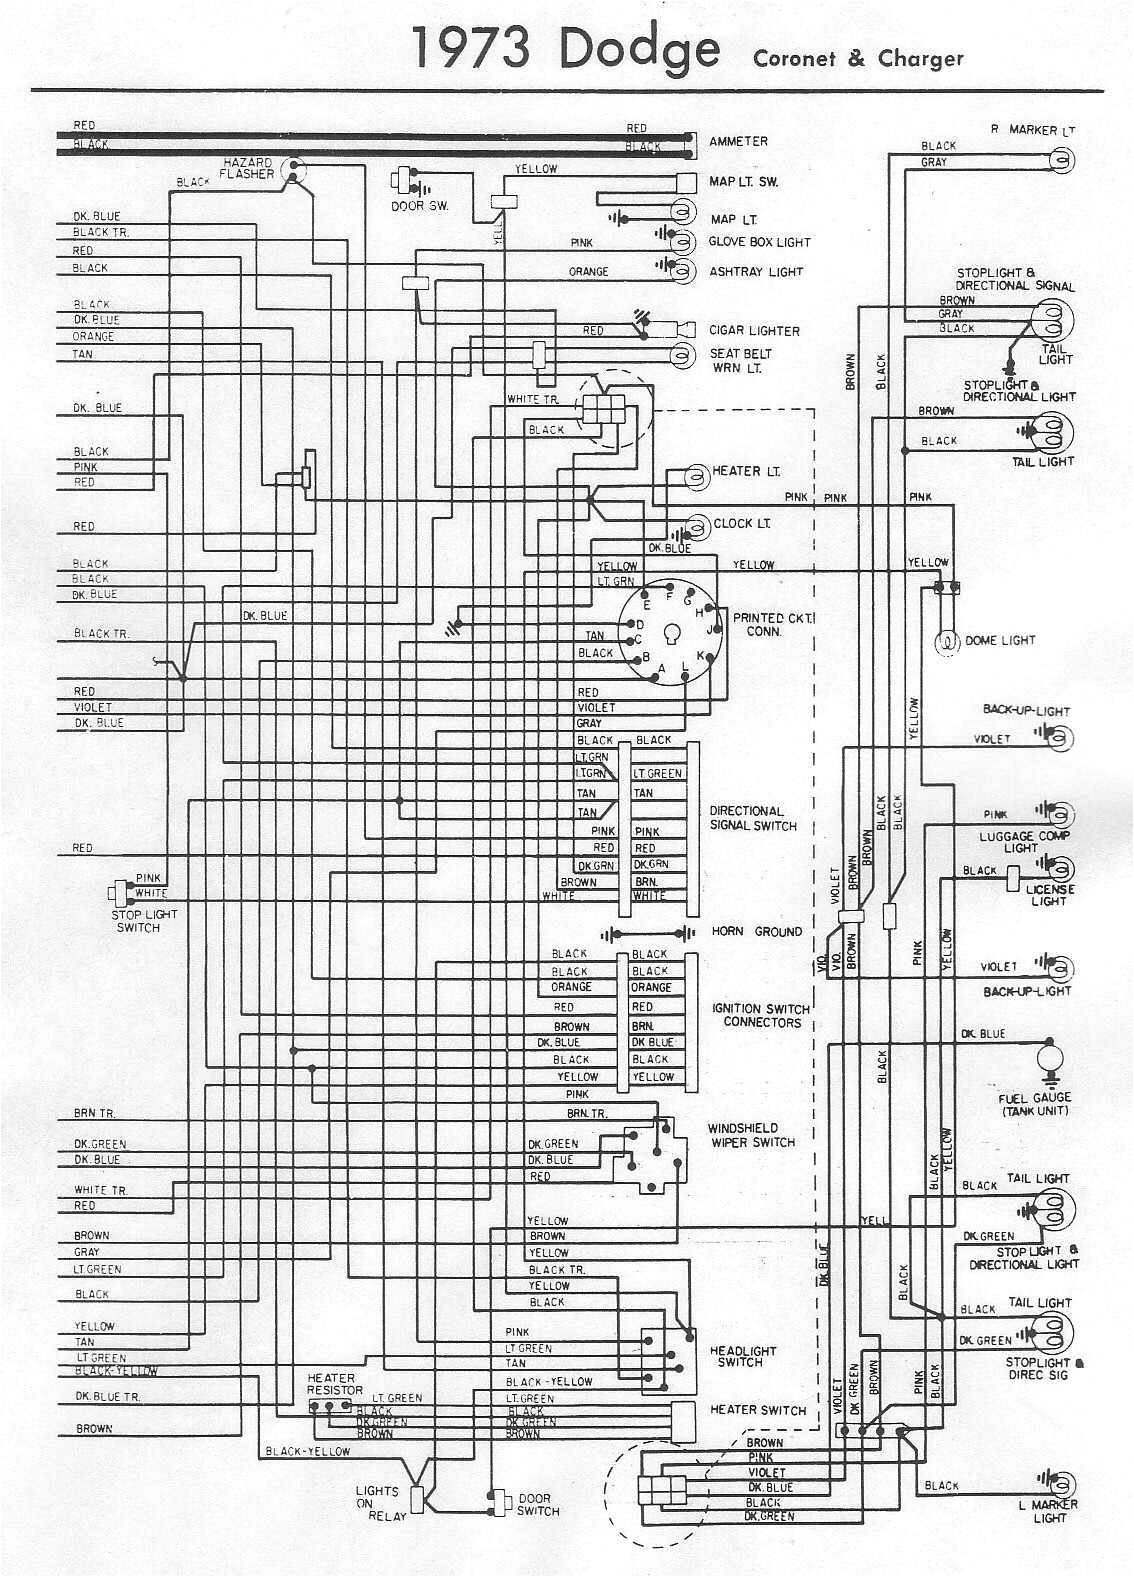 1968 chrysler newport wiring diagram schematic wiring diagram review 1968 chrysler wiring diagram wiring diagram name